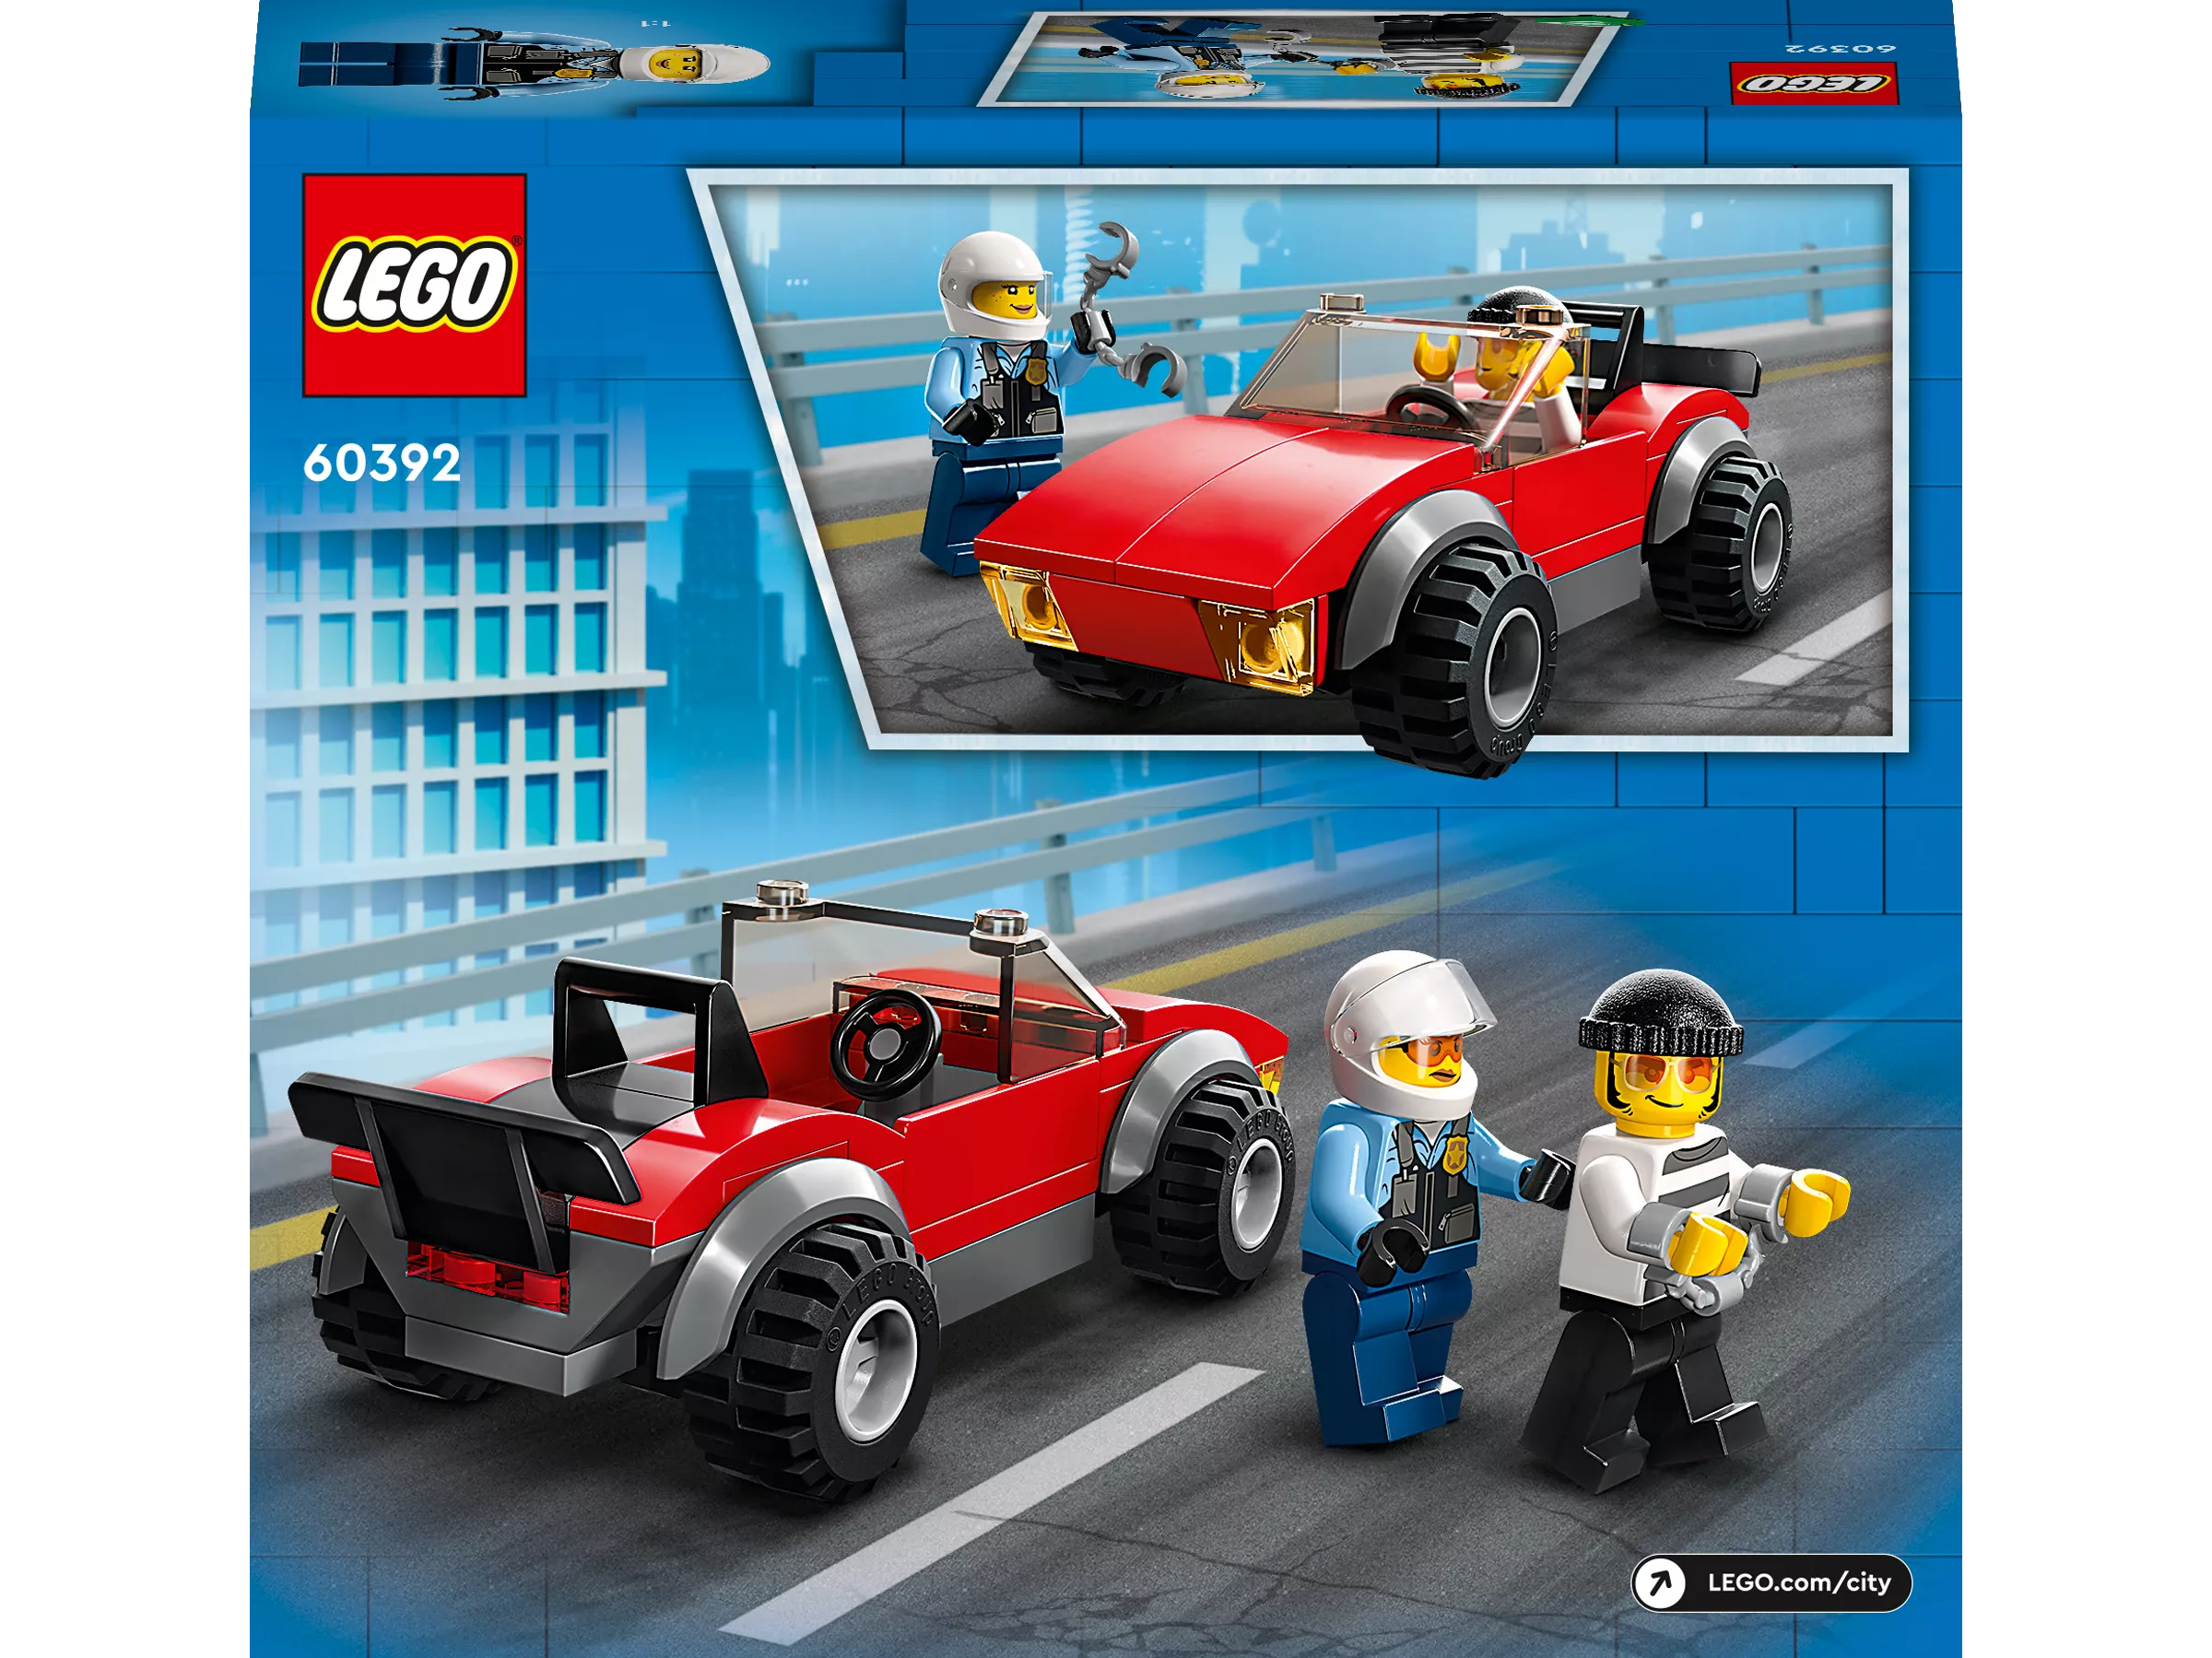 LEGO 60392 Verfolgungsjagd mit dem Polizeimotorrad